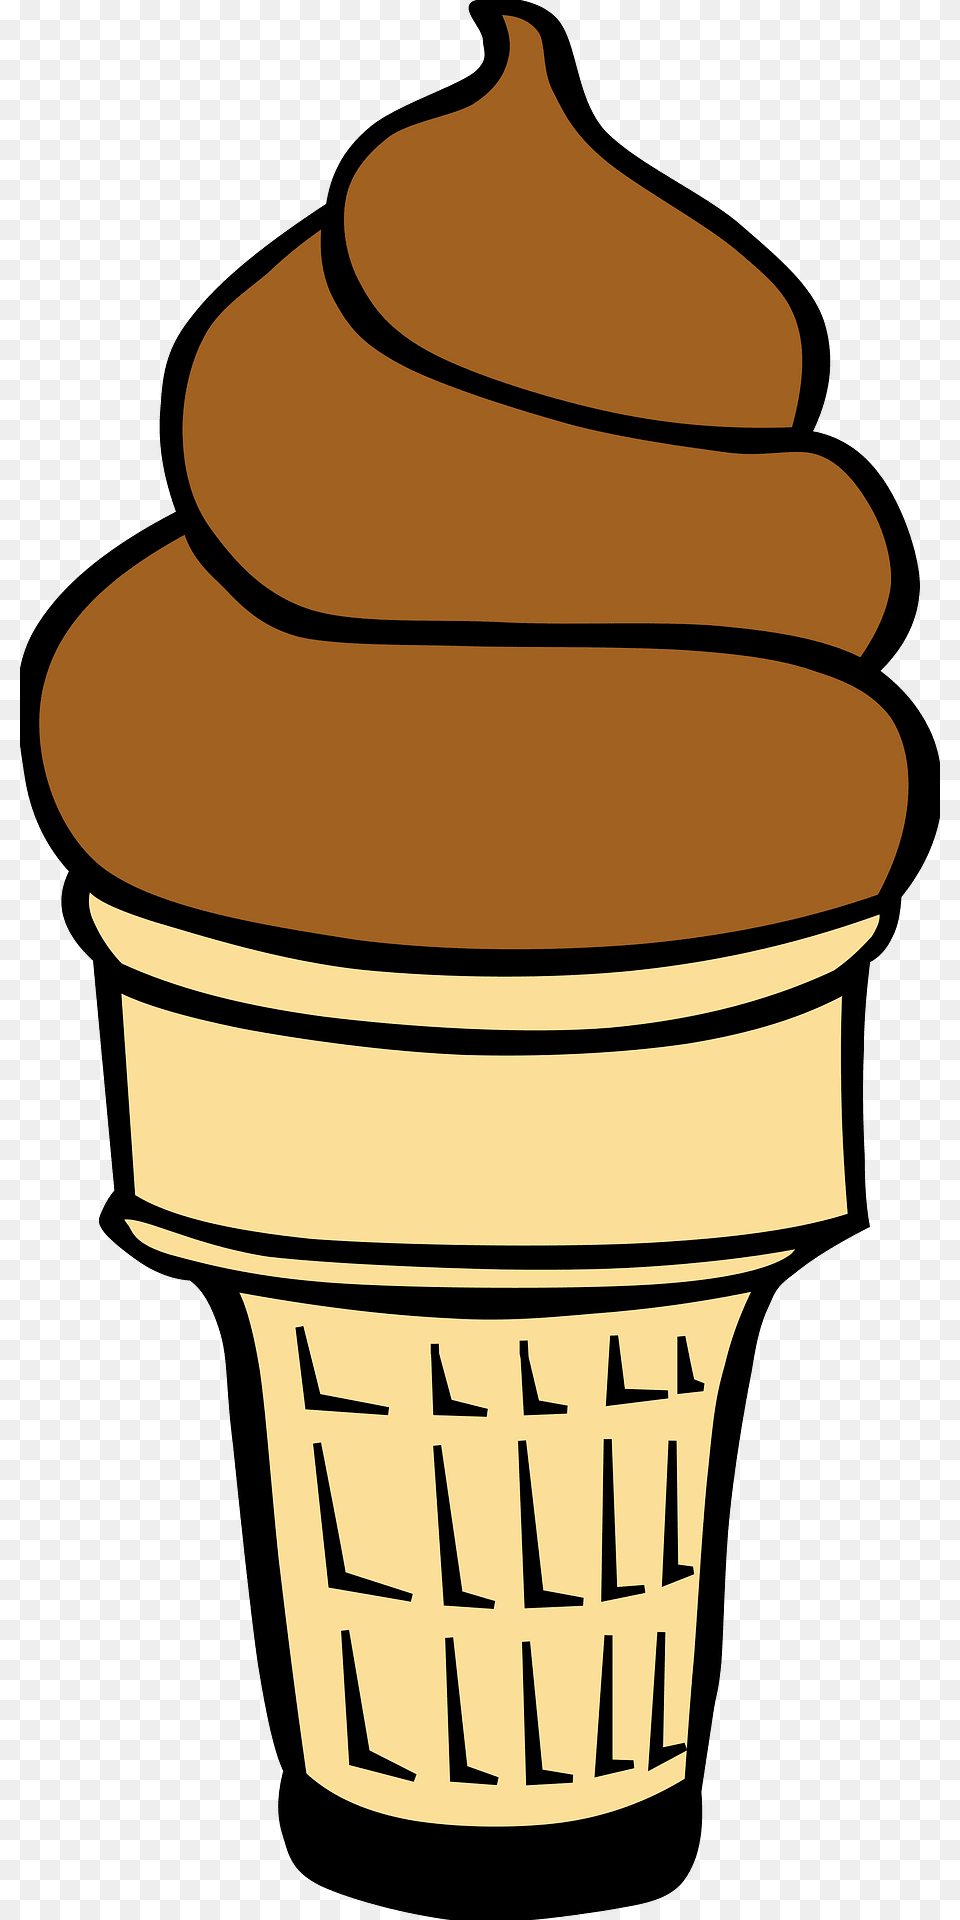 Ice Cream Cone Clipart, Dessert, Food, Ice Cream, Ammunition Free Transparent Png